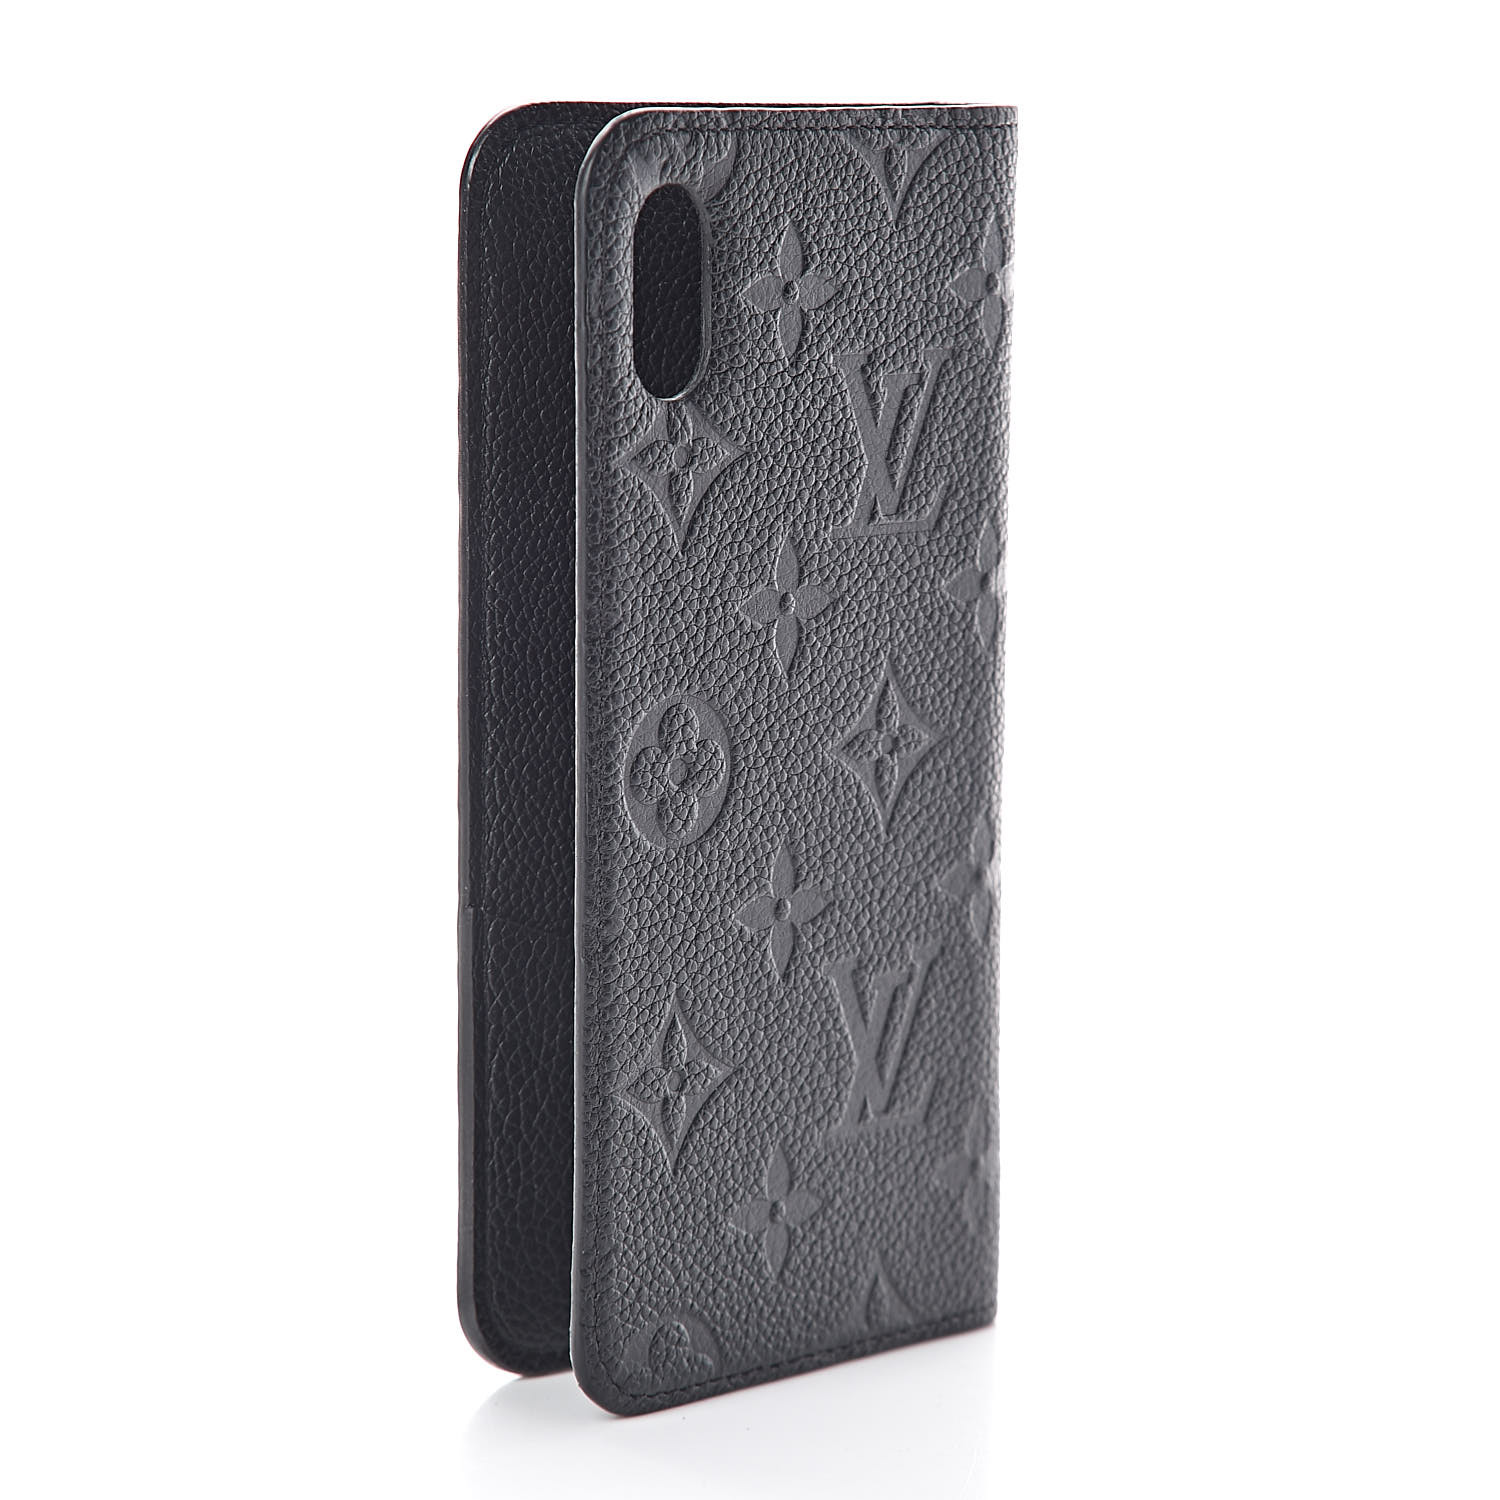 LOUIS VUITTON Empreinte iPhone XS Max Folio Case Black 446480